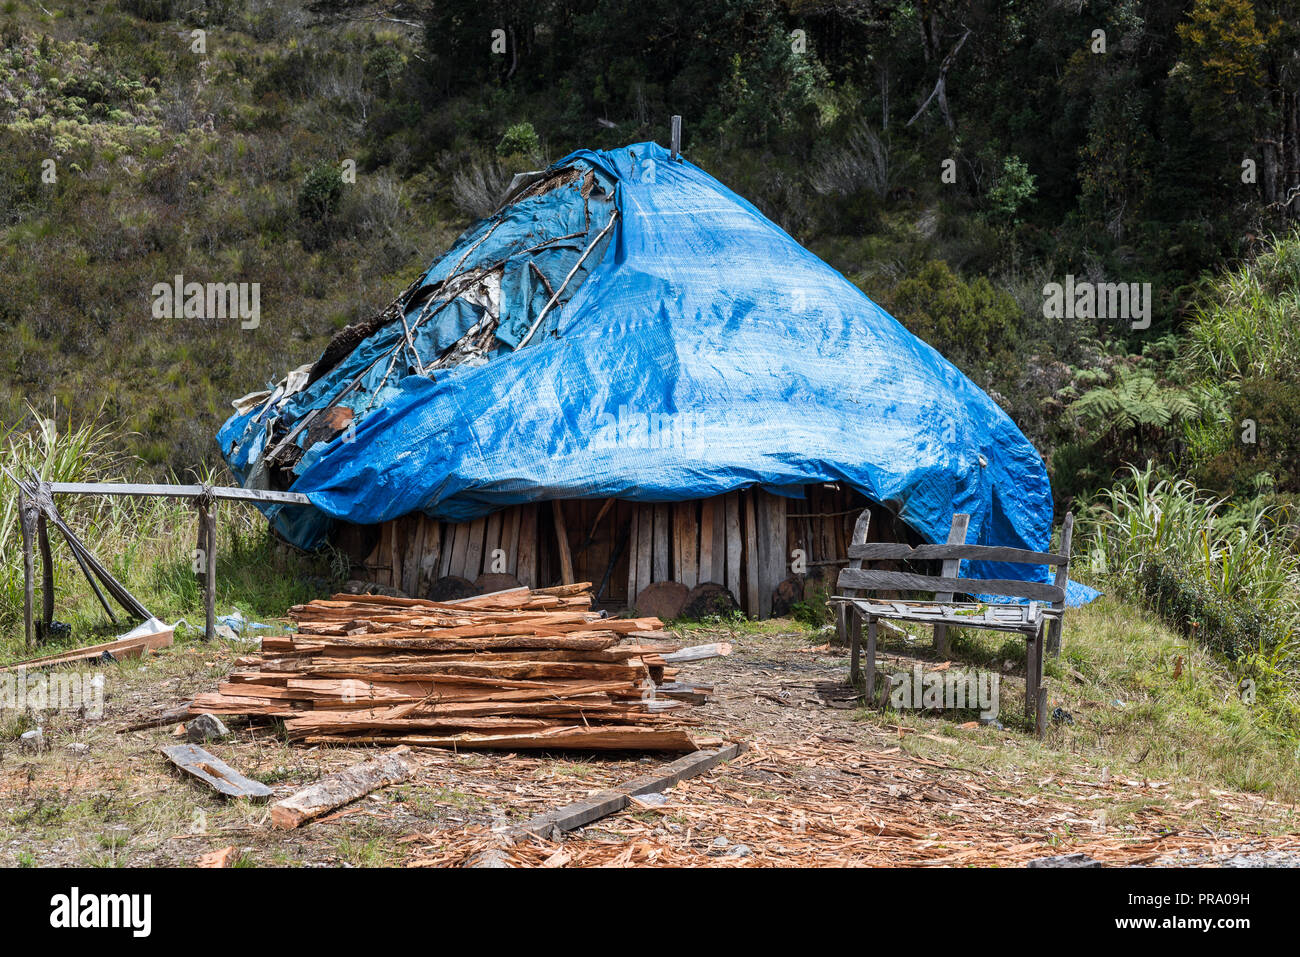 Grass-top hut of native Dani people. Wamena, Papua, Indonesia. Stock Photo